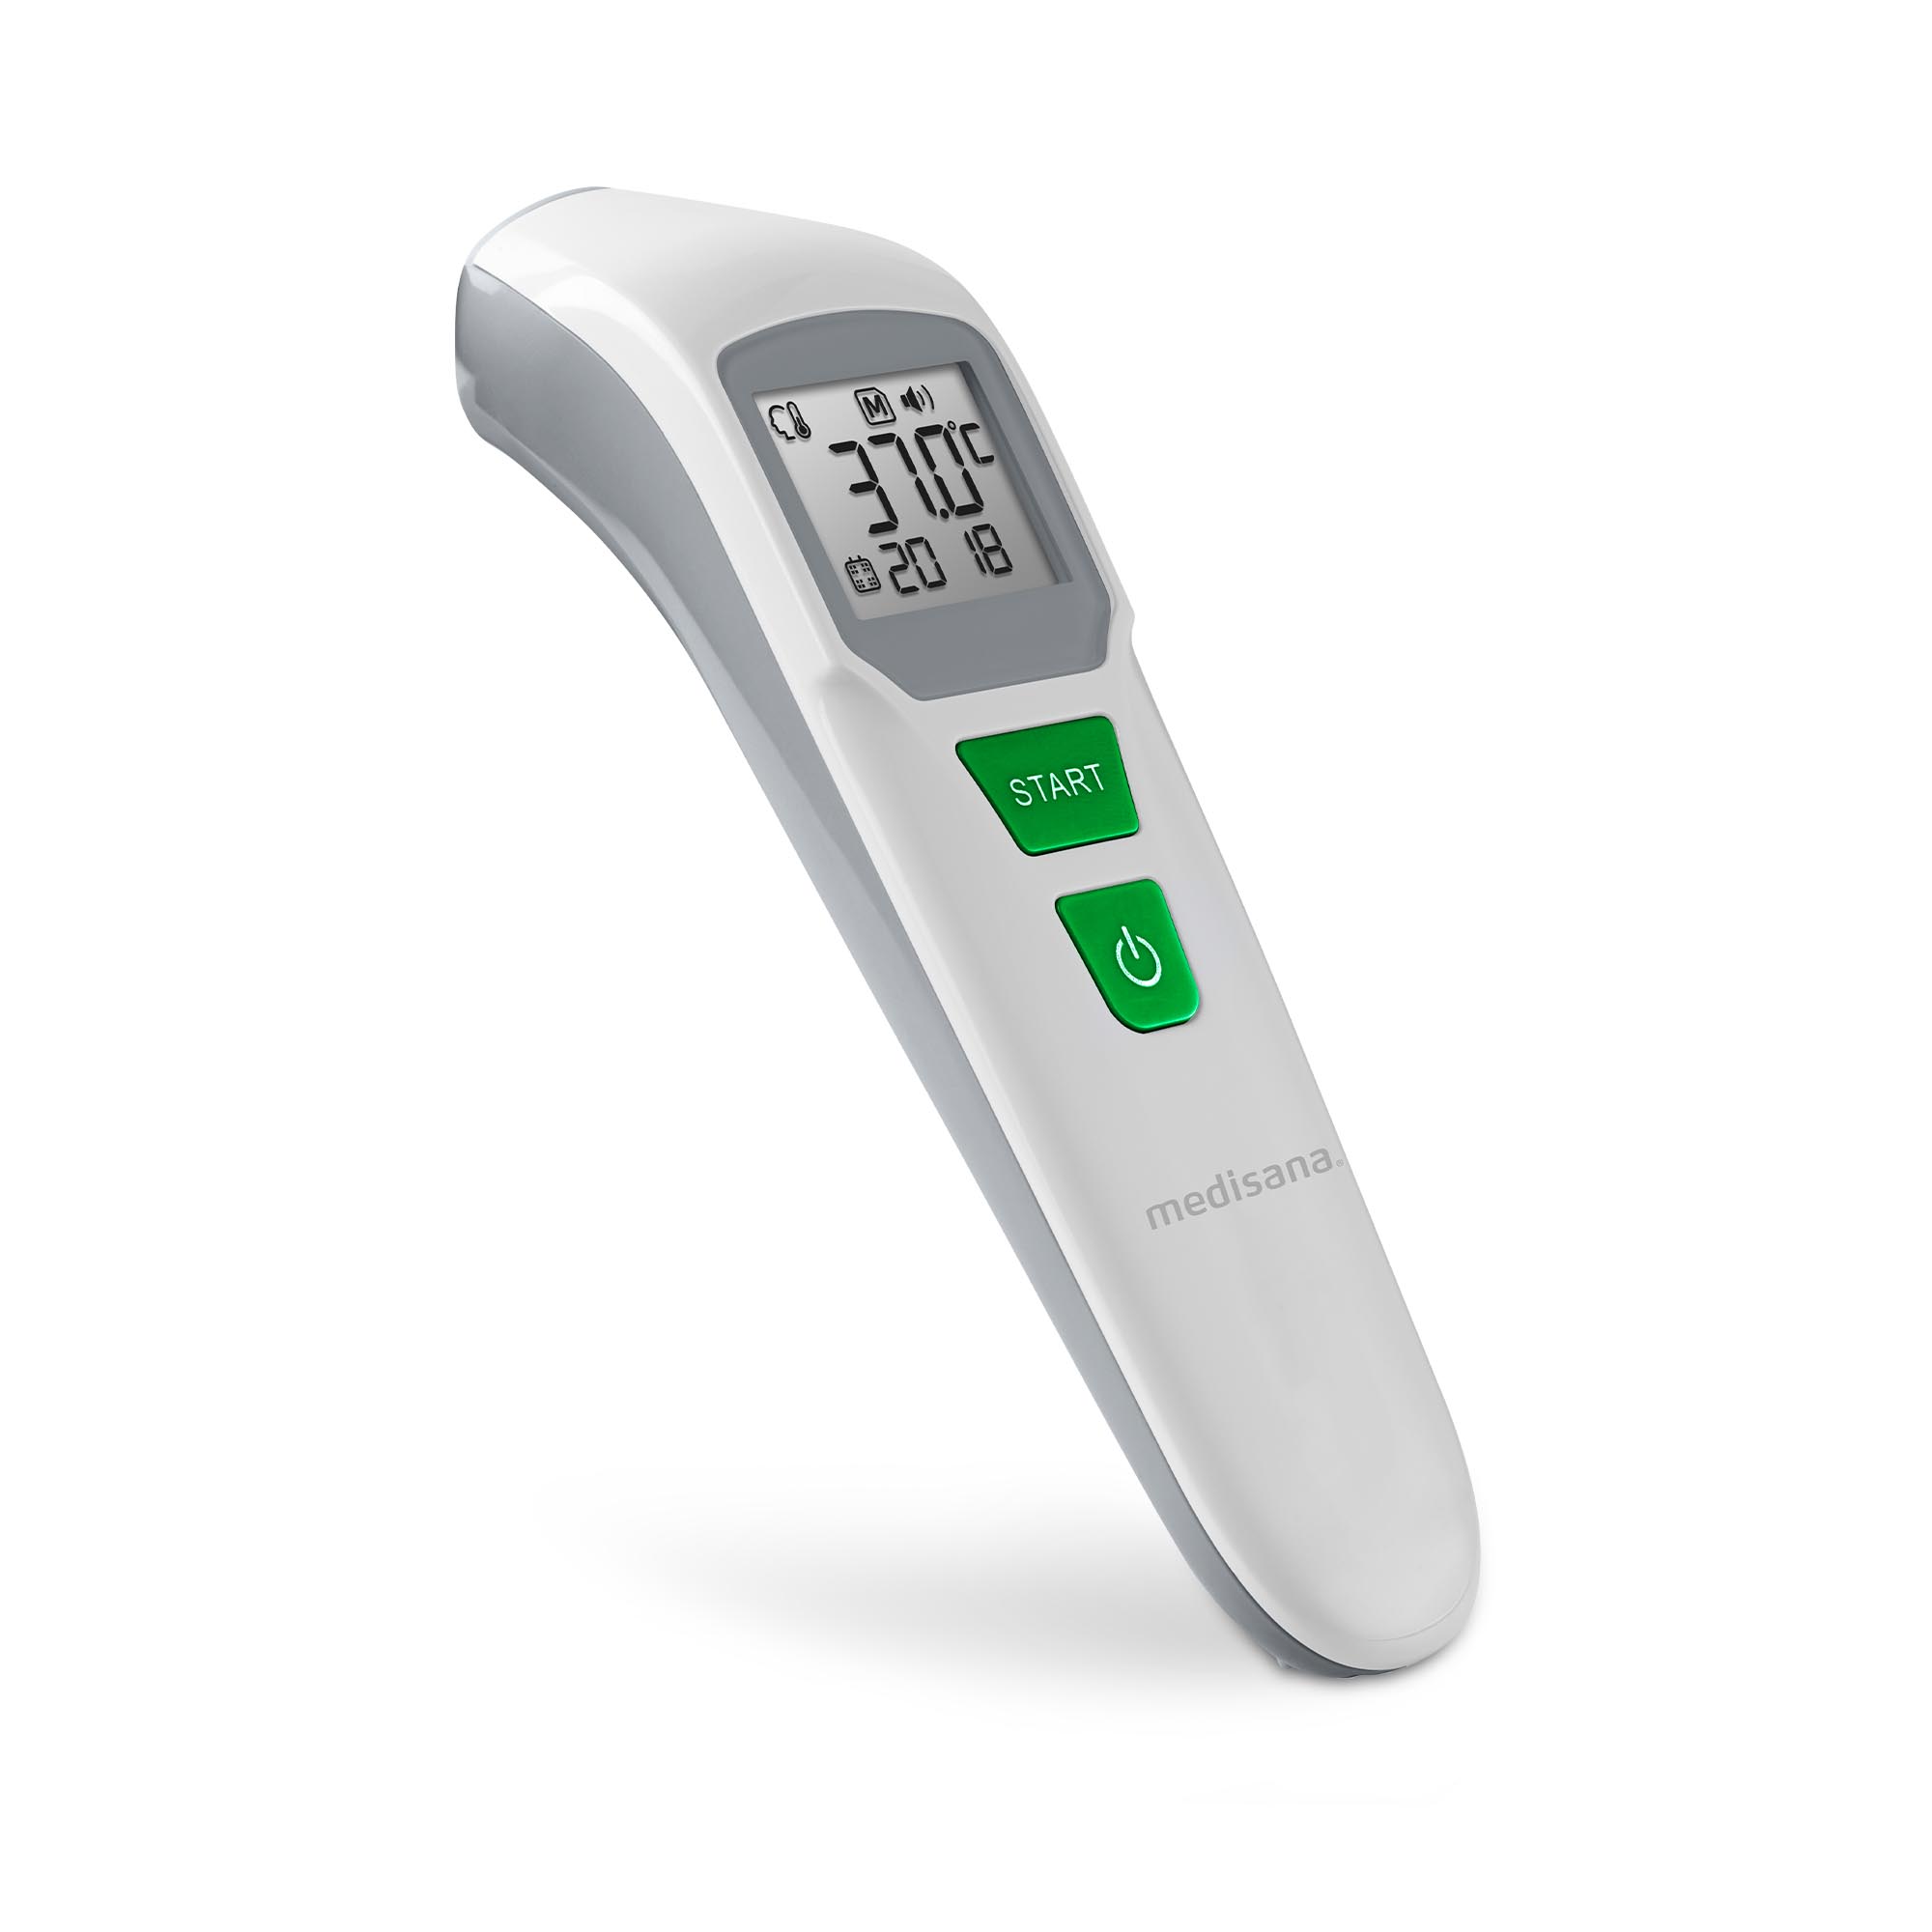 TM 762 Thermometer medisana® Infrared Functional Multi